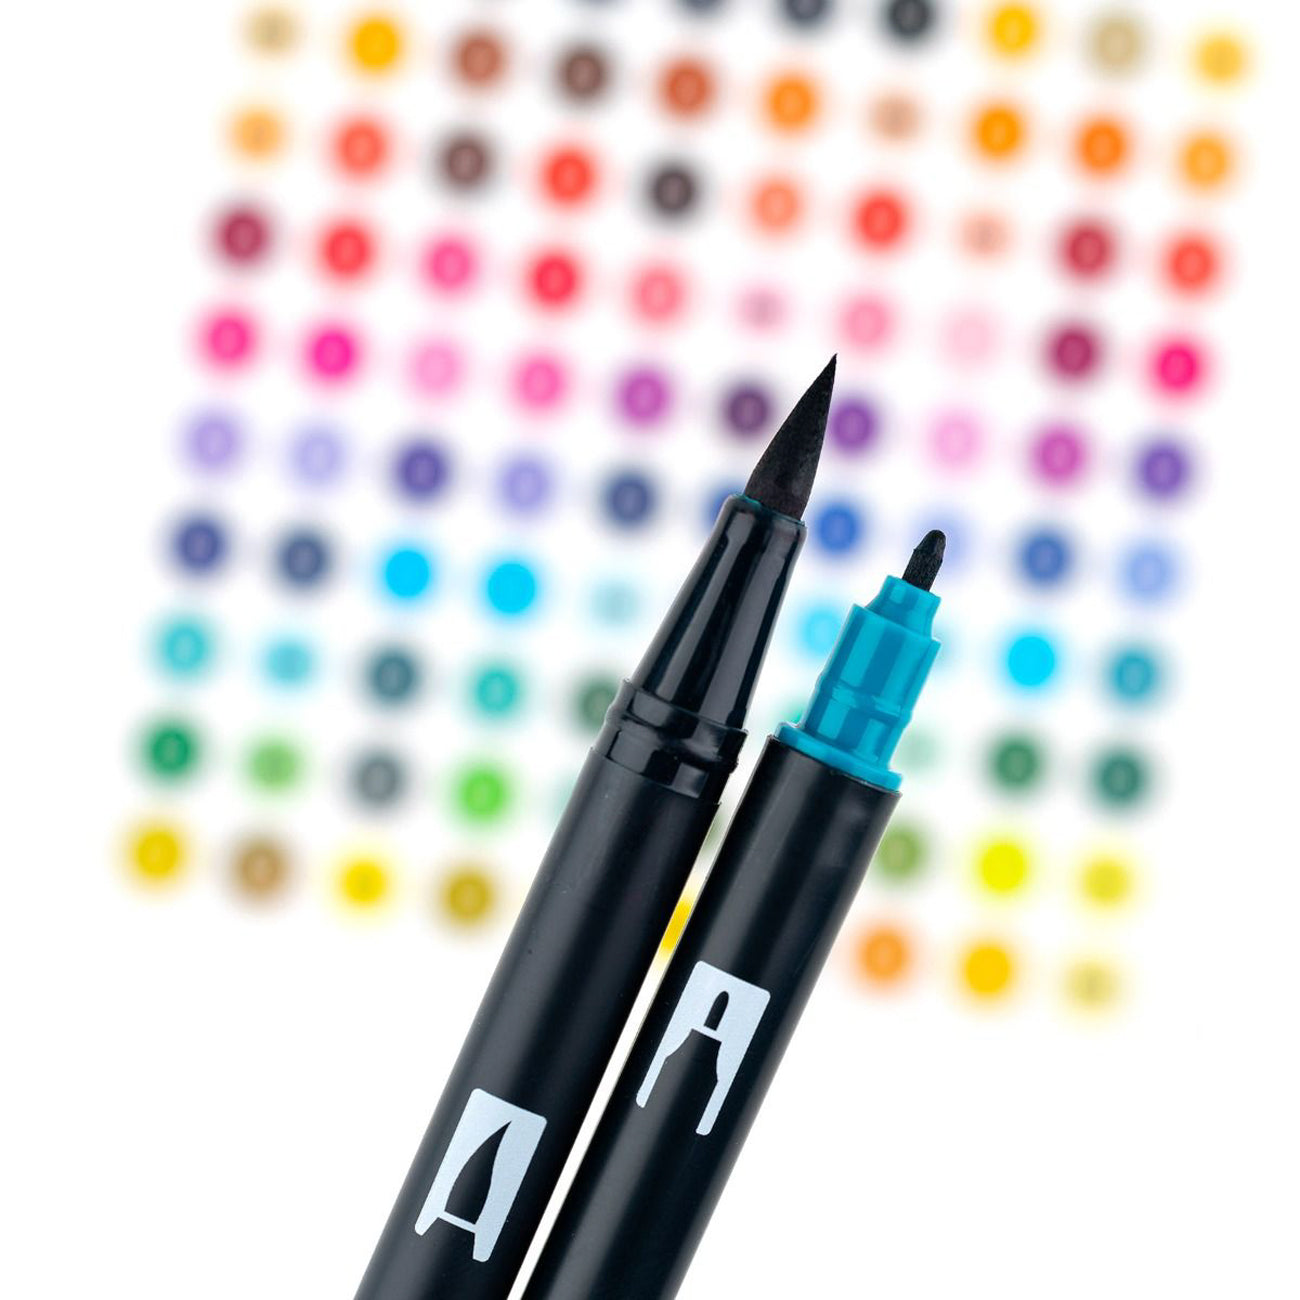 Tombow Dual Brush Pen Blending Kit